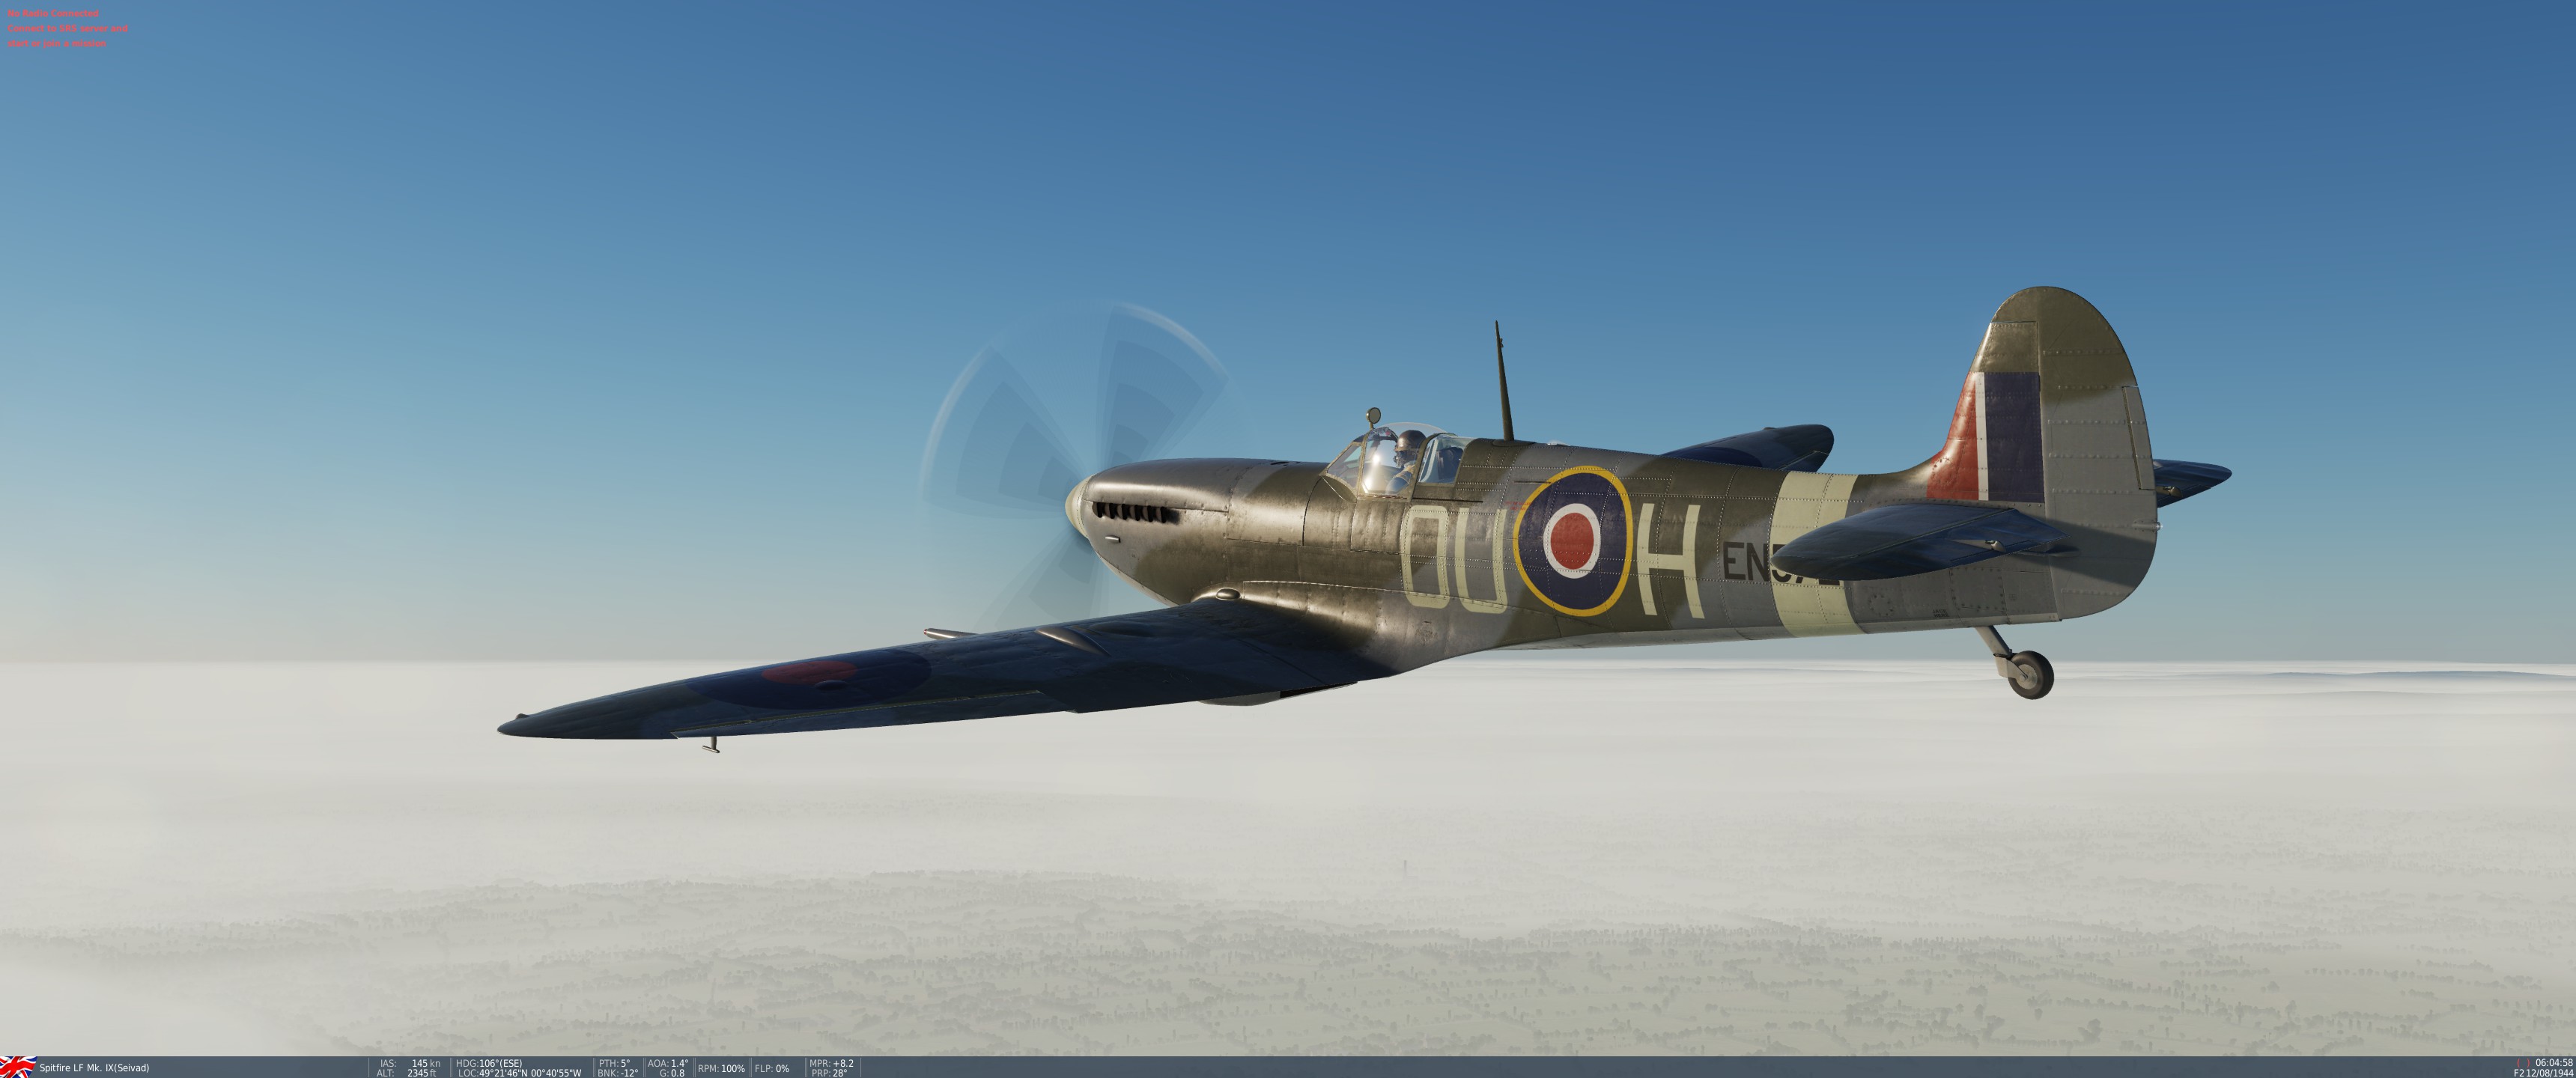 Spitfire Mk.IX, EN572, S/L Johnny Checketts, 485 Squadron (NZ) March 1943